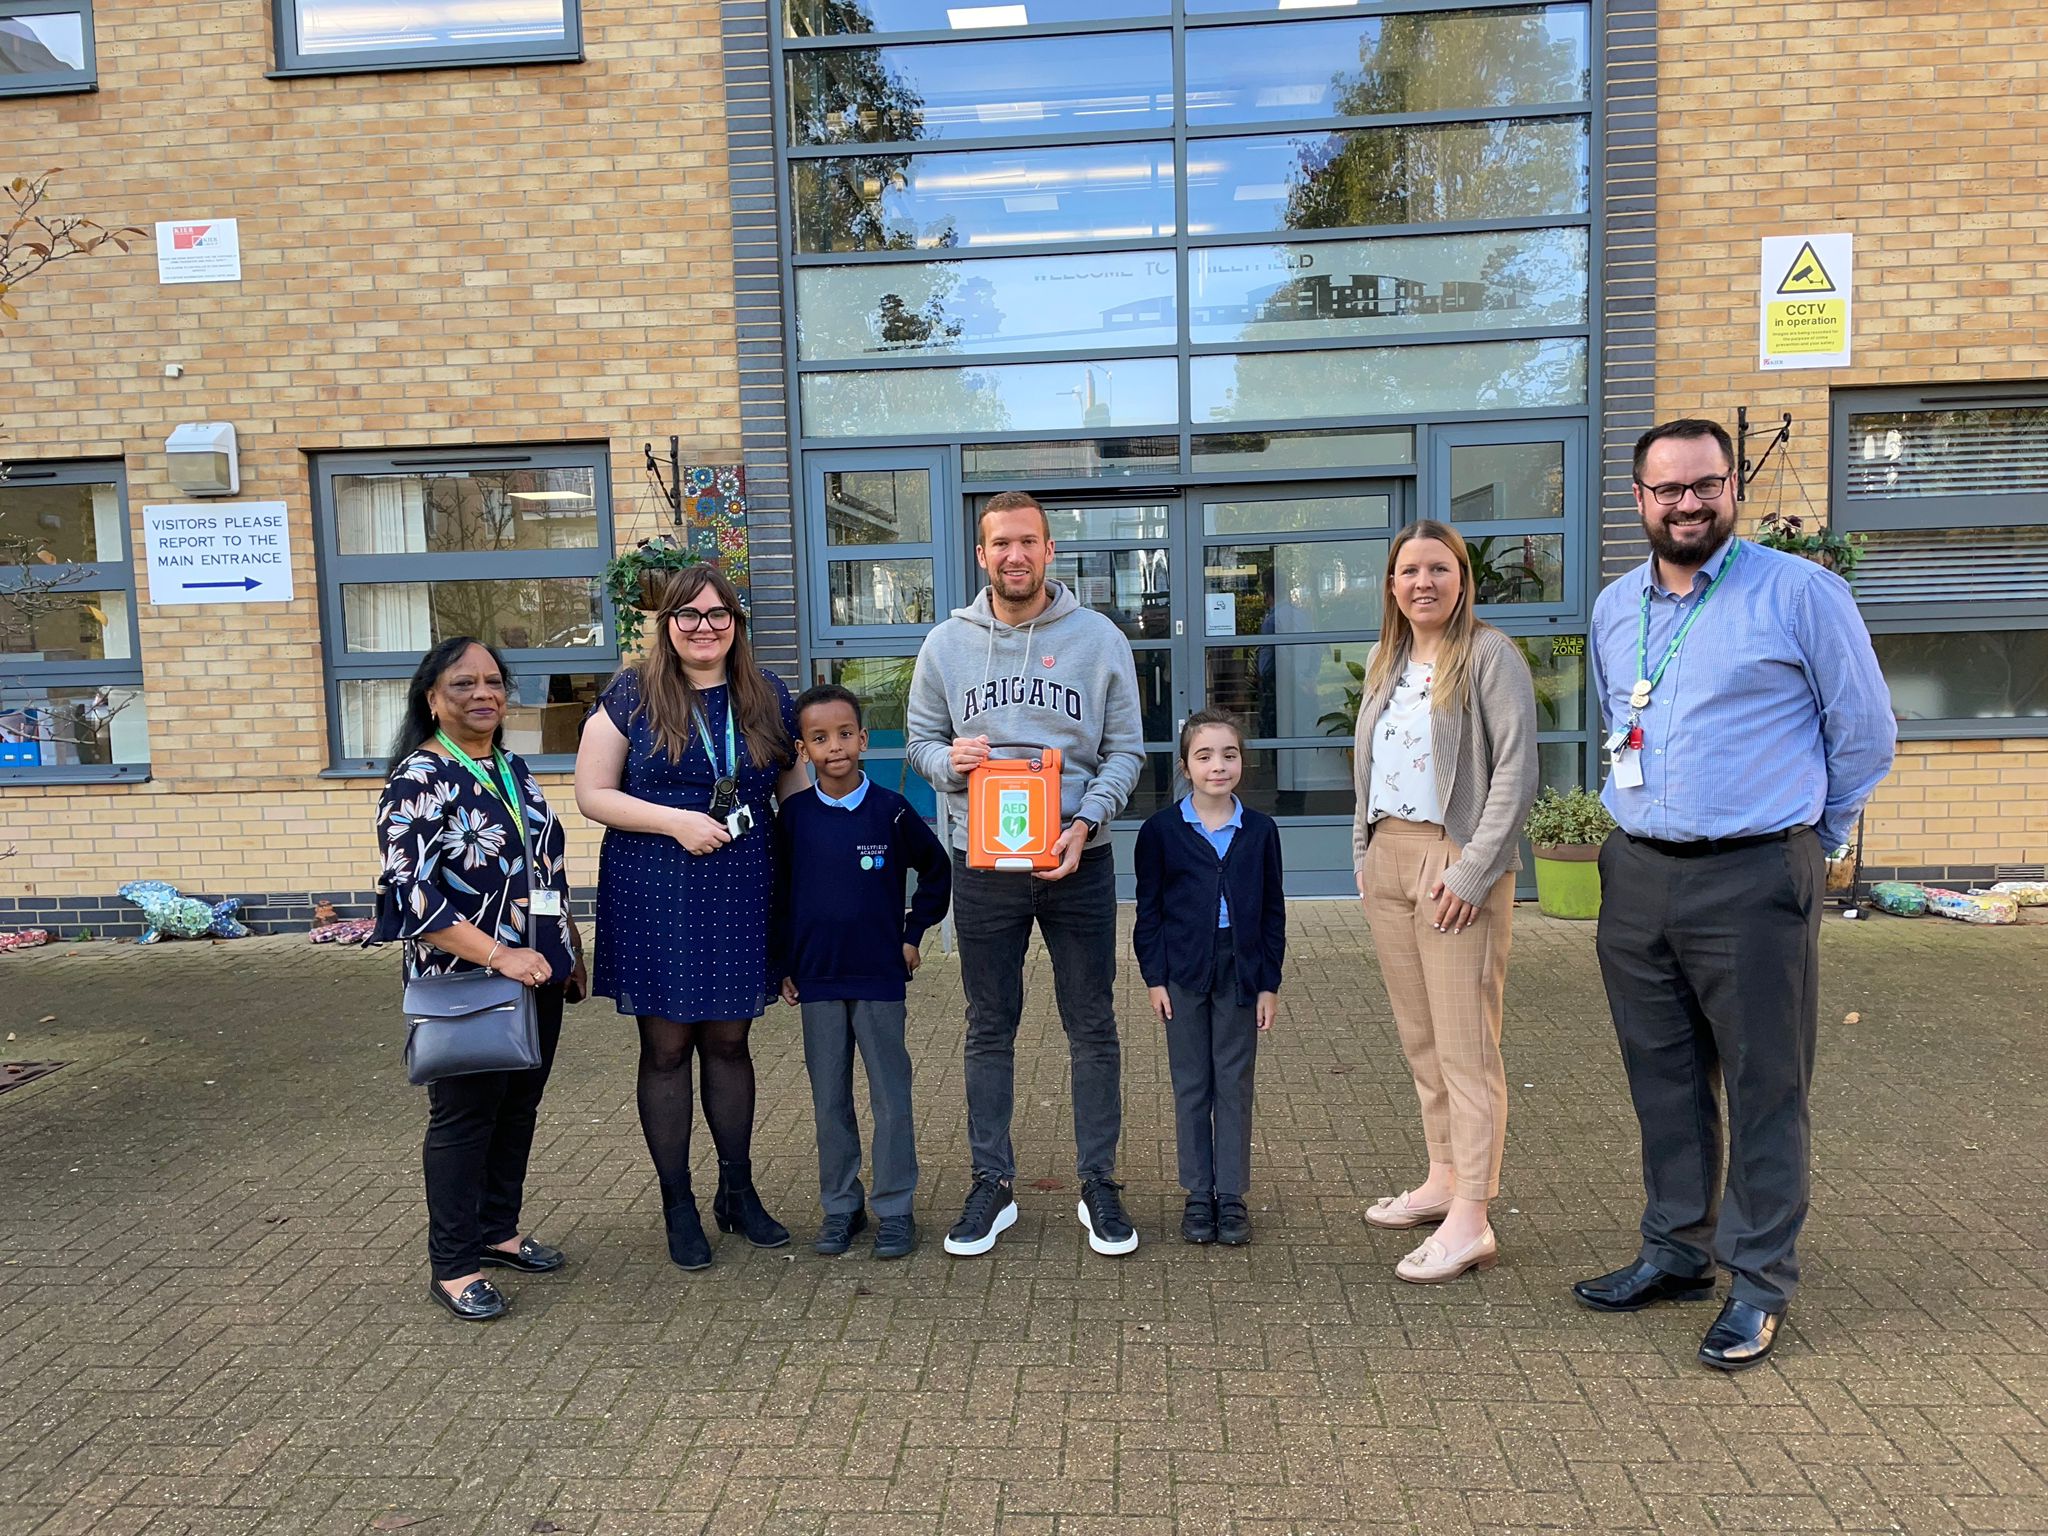 London Schools Amongst Latest Recipients of JE3 Donations